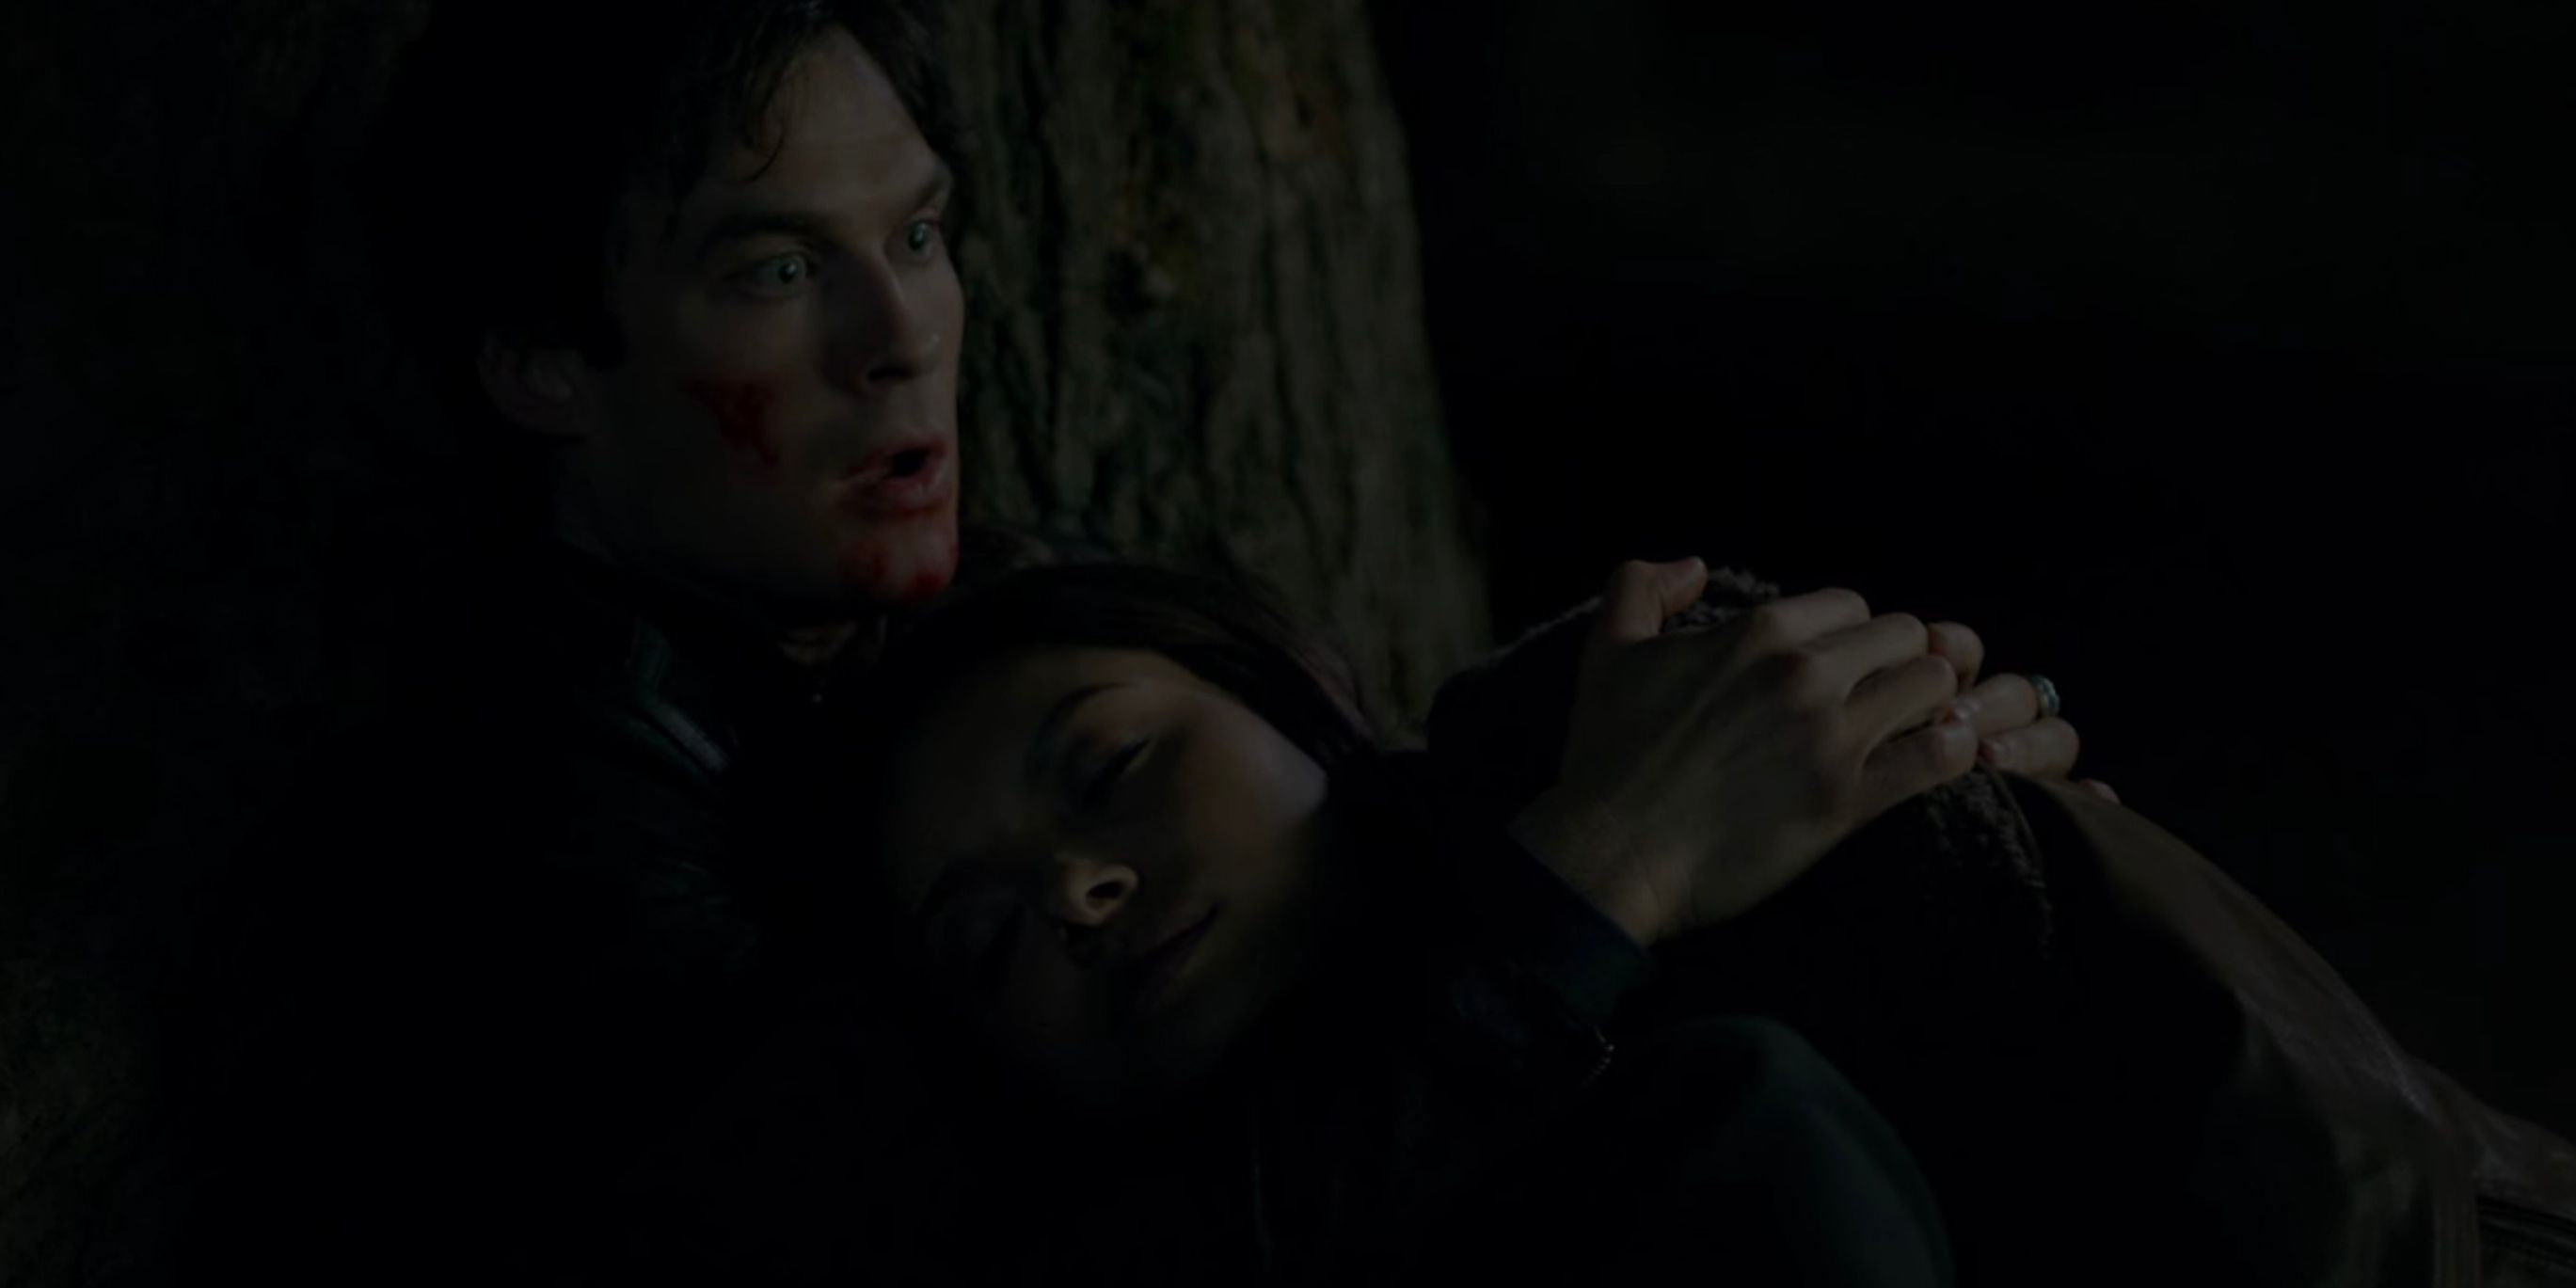 The Vampire Diaries 10 Scenes That Prove Damon And Bonnie Were Soulmates